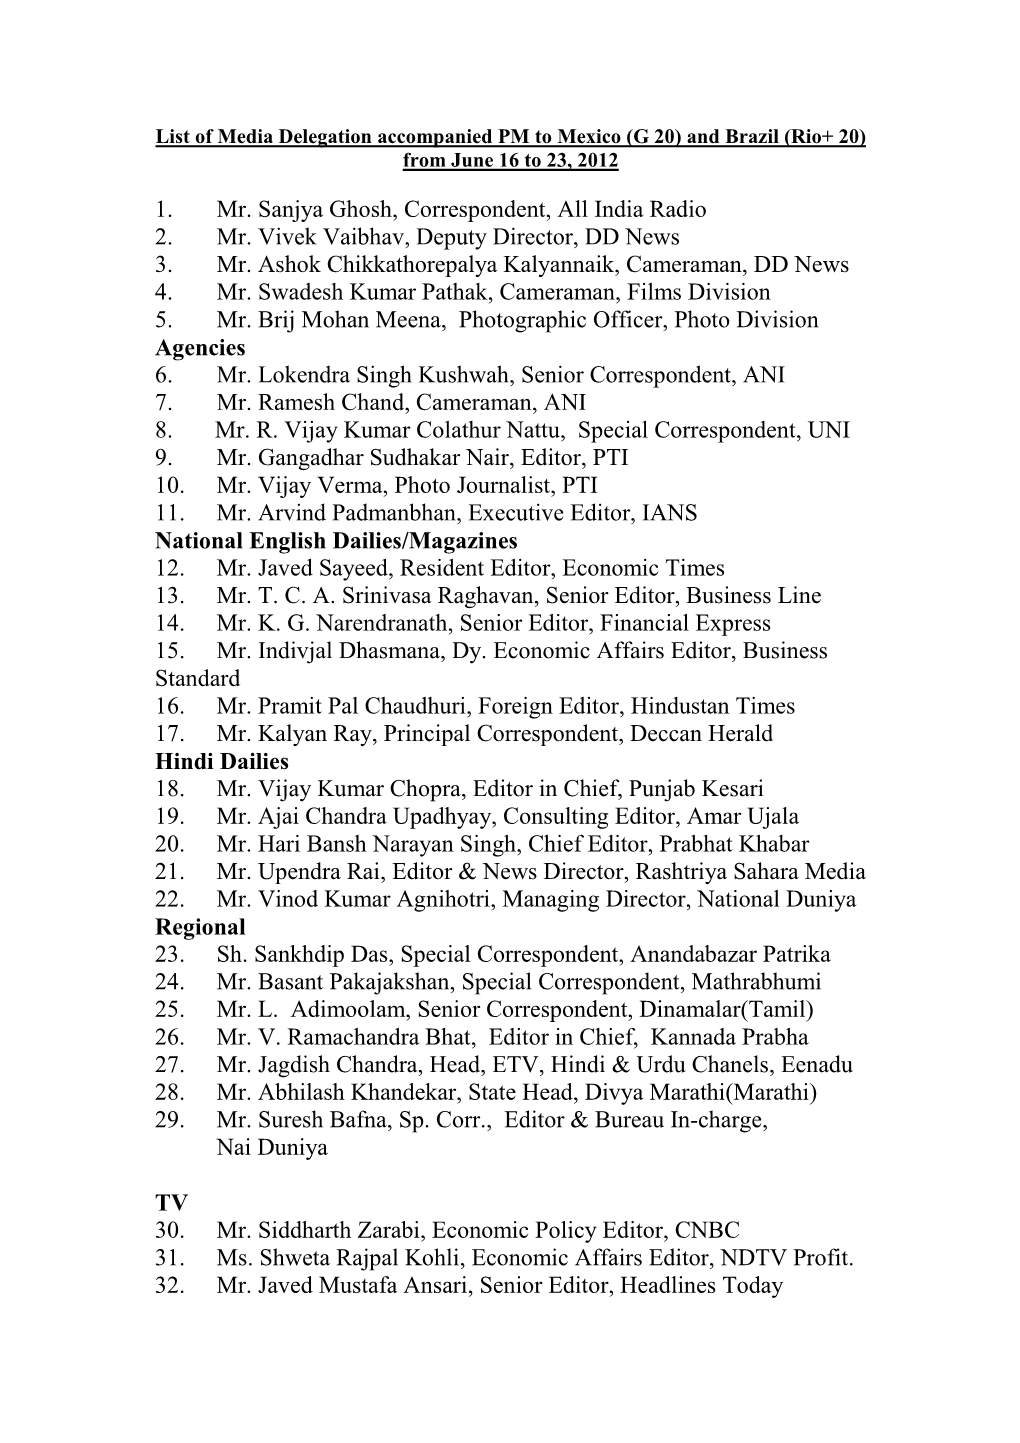 List of Media Delegates[1]